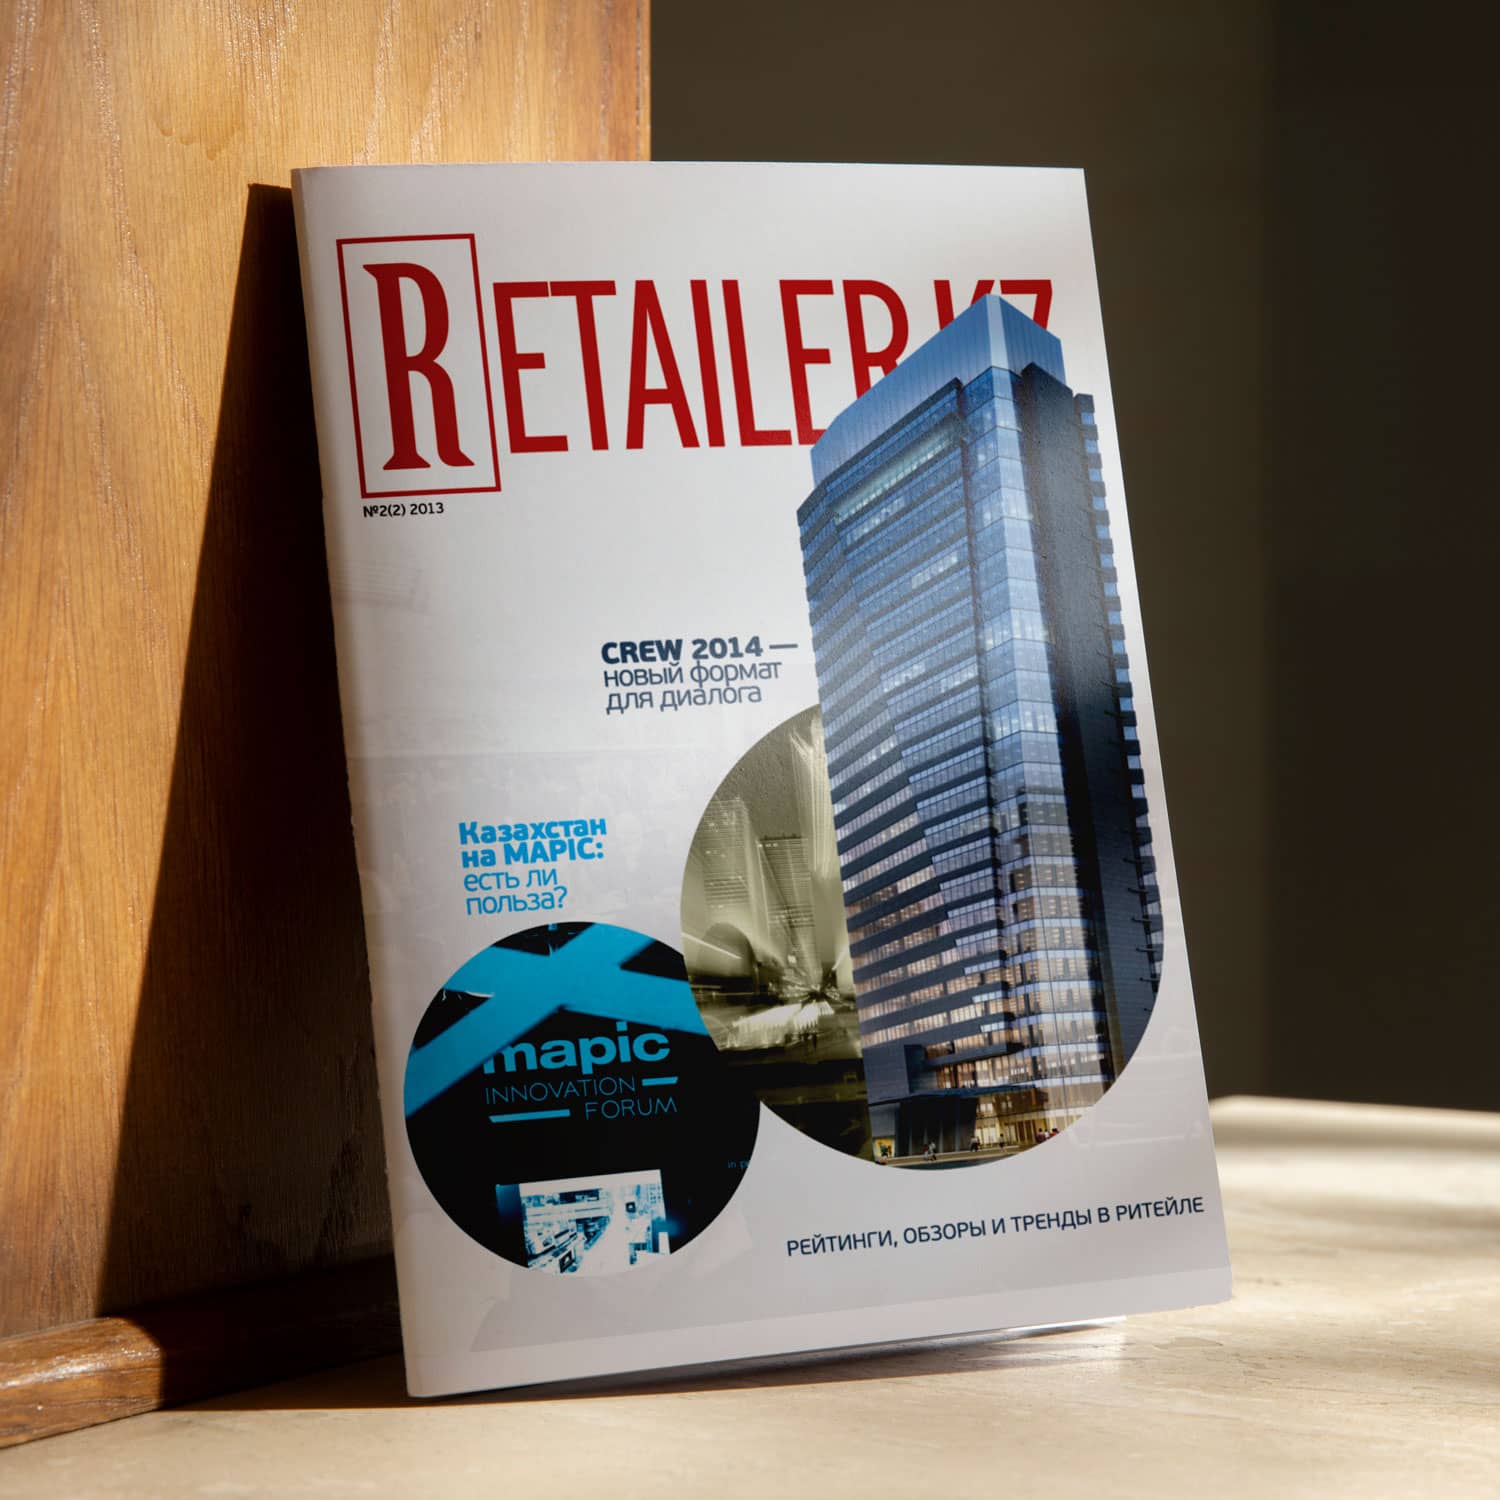 Обложка журнала Retailer.kz 2